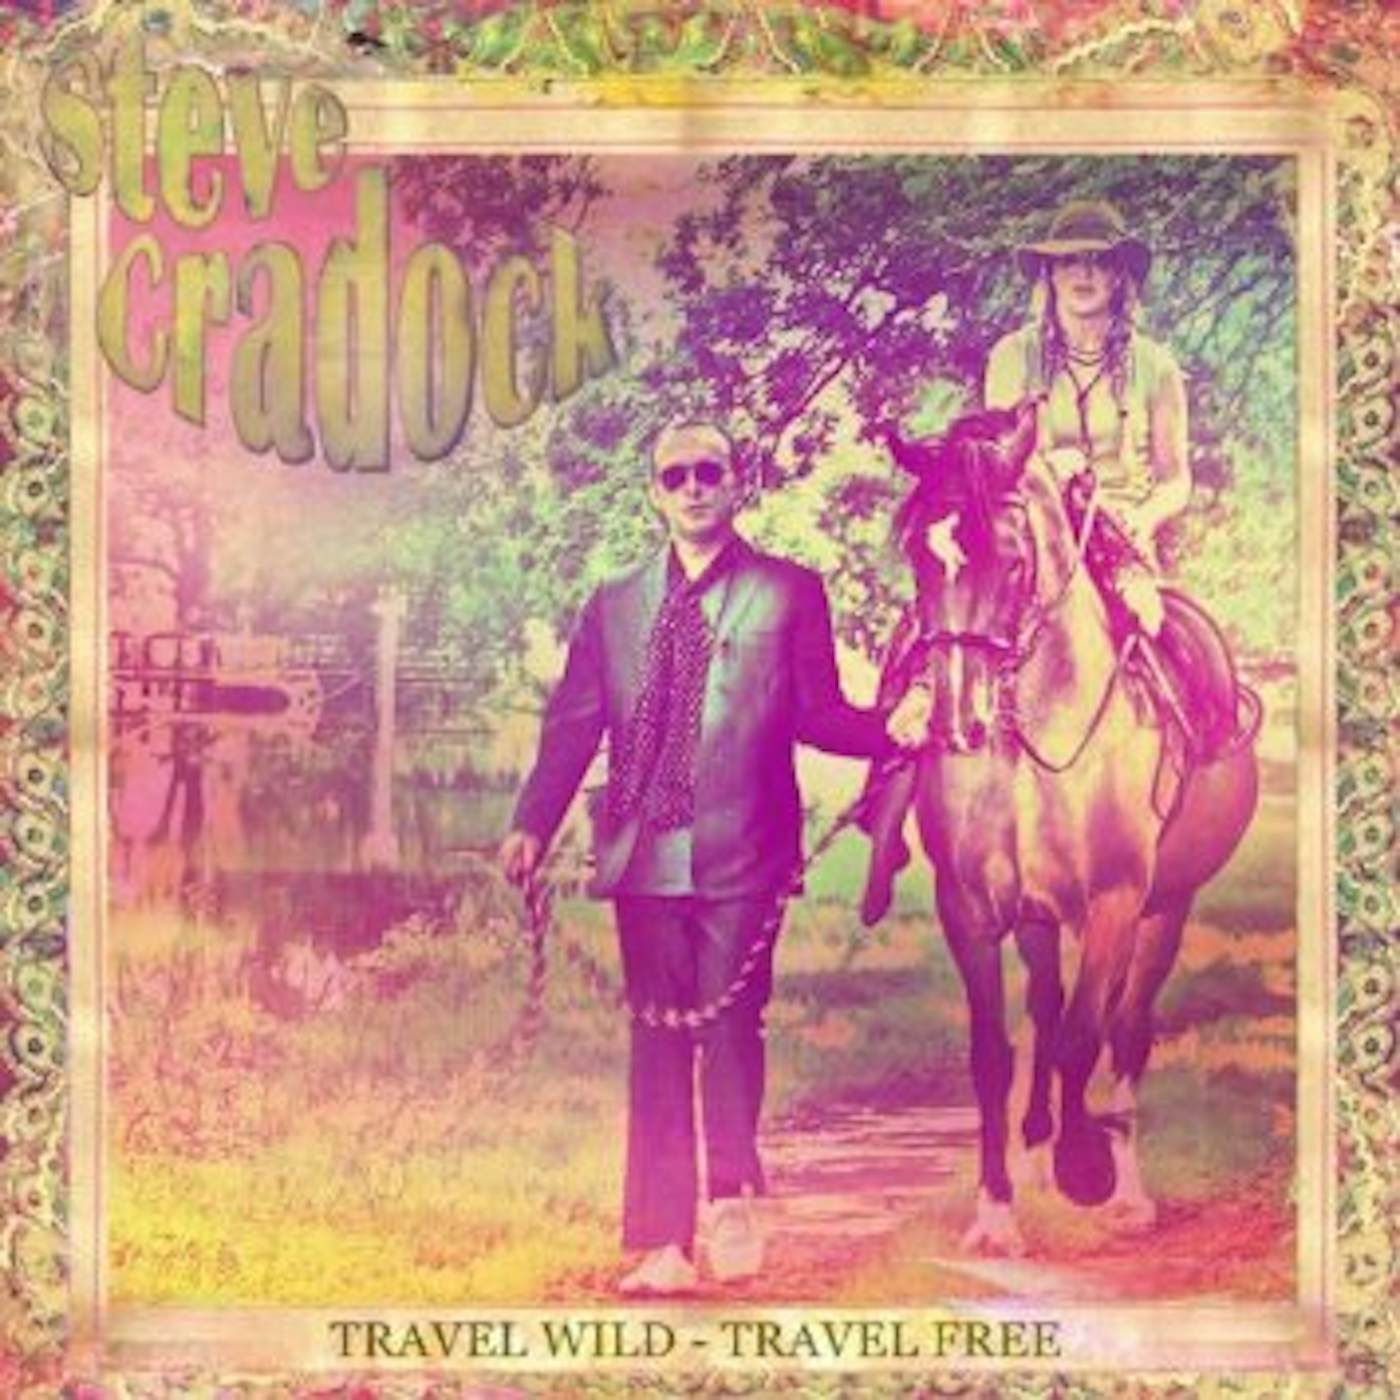 Steve Cradock TRAVEL WILD TRAVEL FREE CD